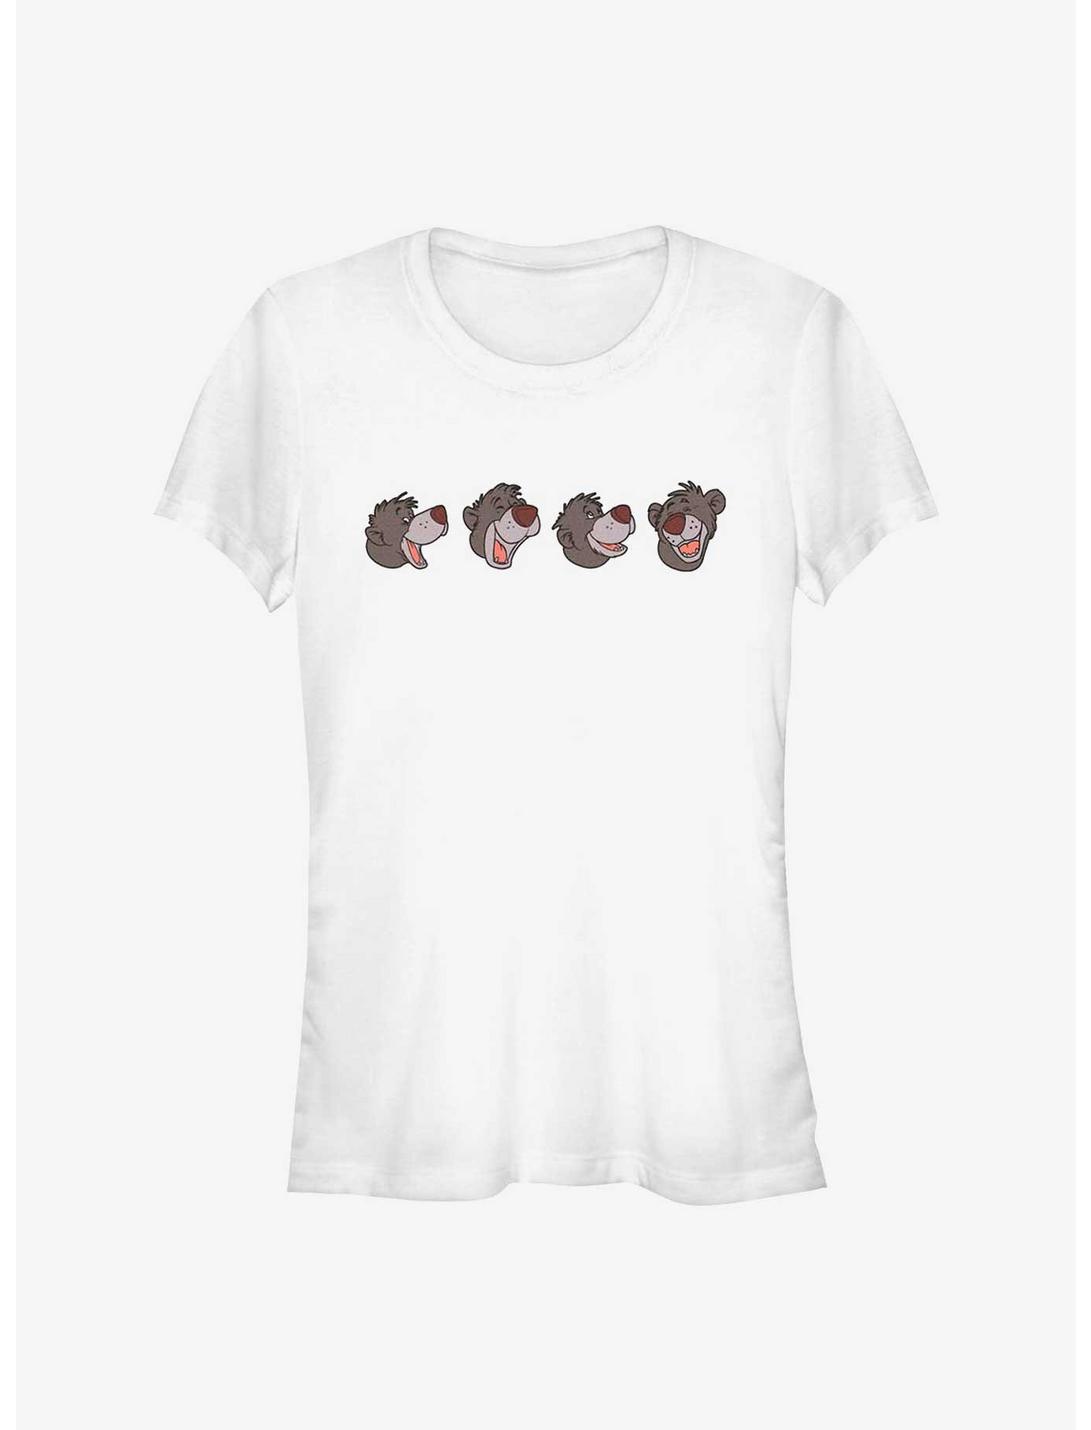 Disney The Jungle Book Baloo Faces Girls T-Shirt, WHITE, hi-res